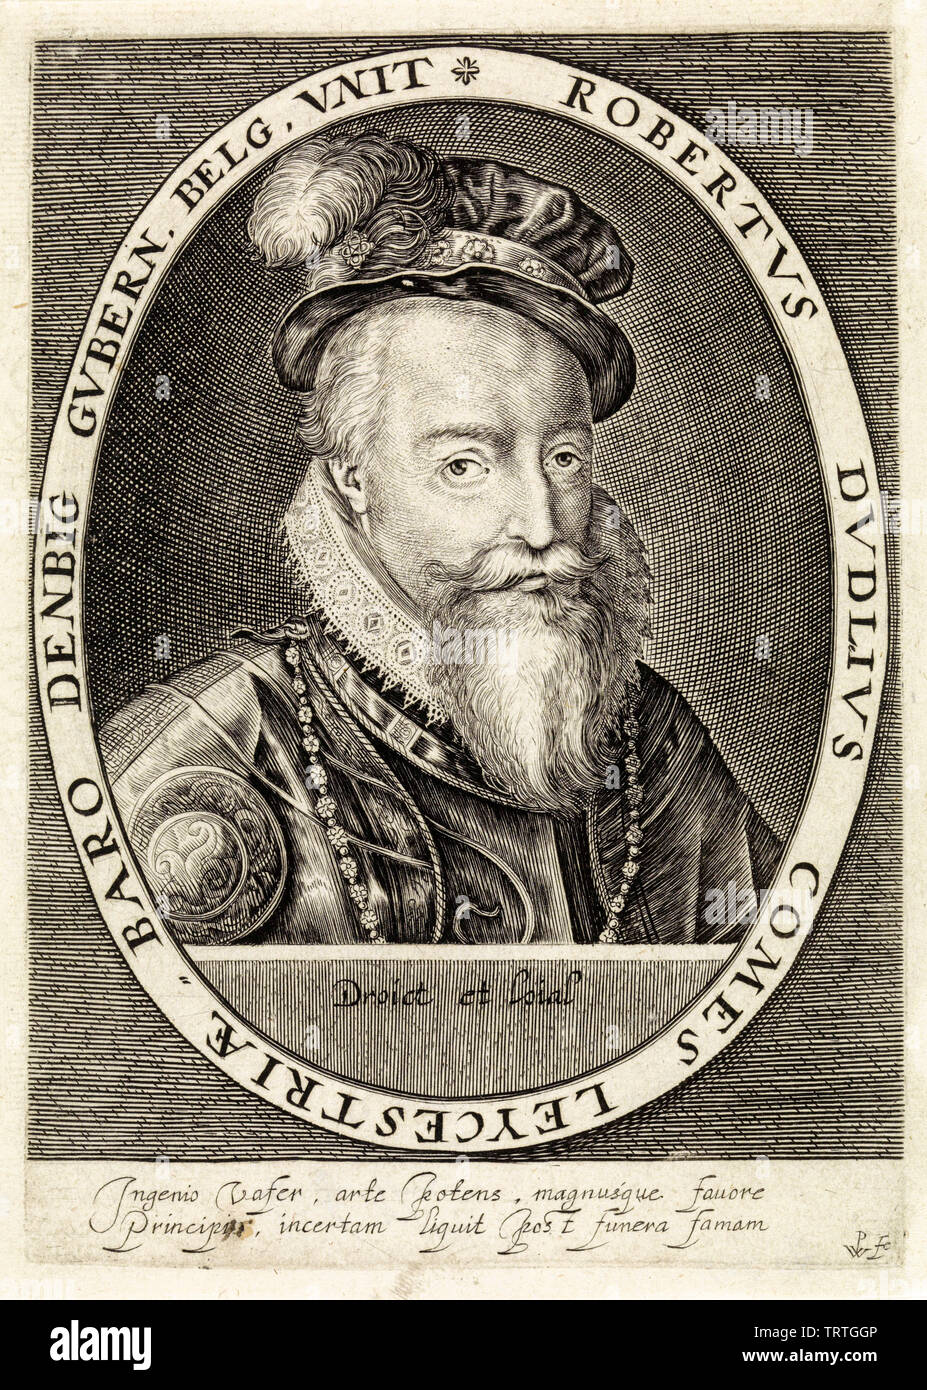 Robert Dudley, Earl of Leicester, 1532-1588, Porträt Gravur, 1620 Stockfoto